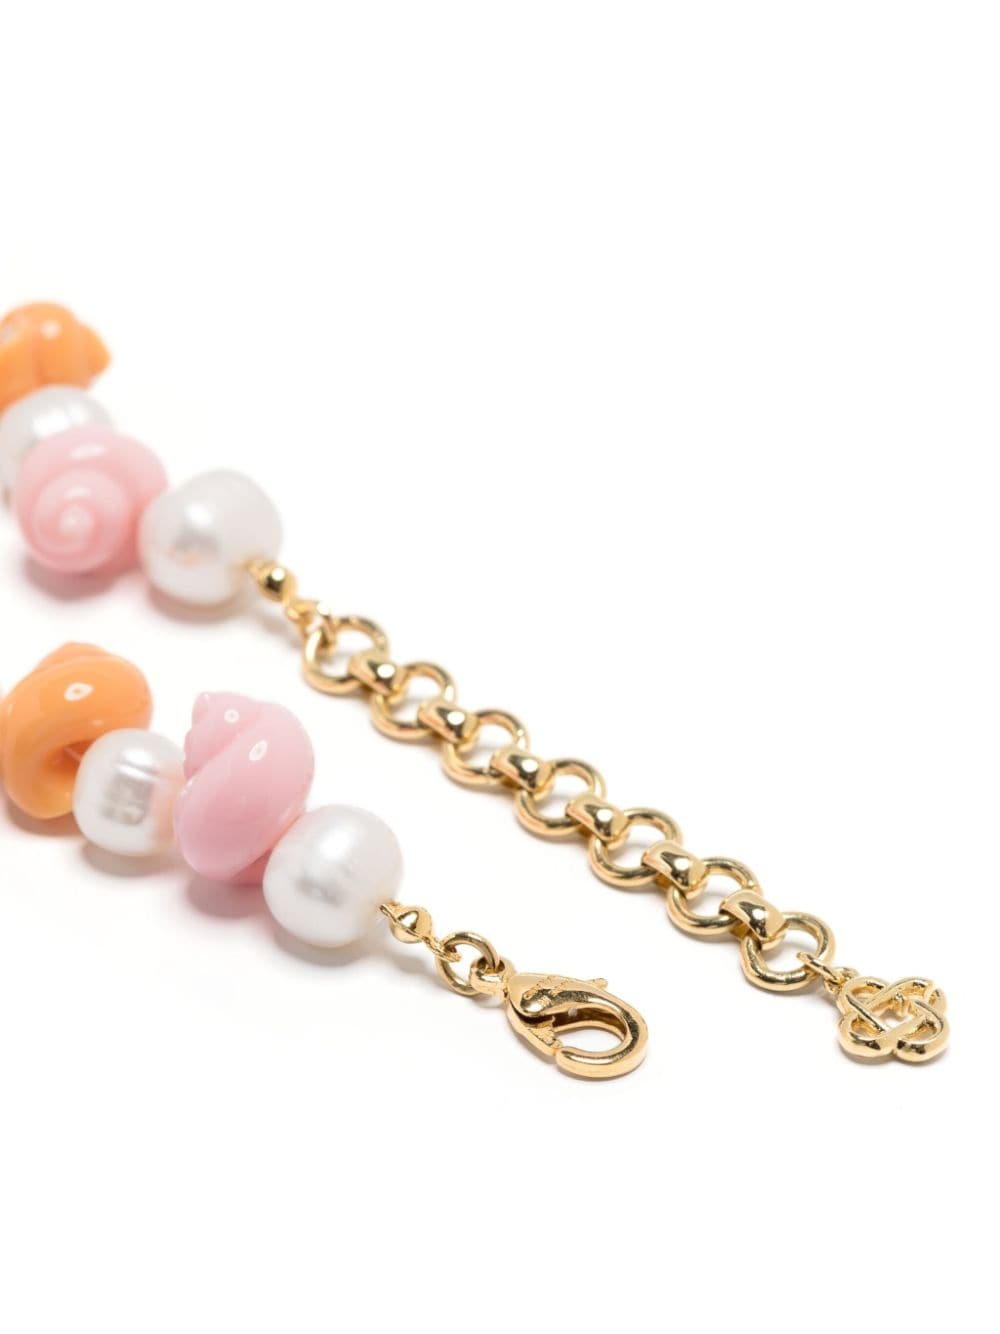 shell-embellished necklace - 2